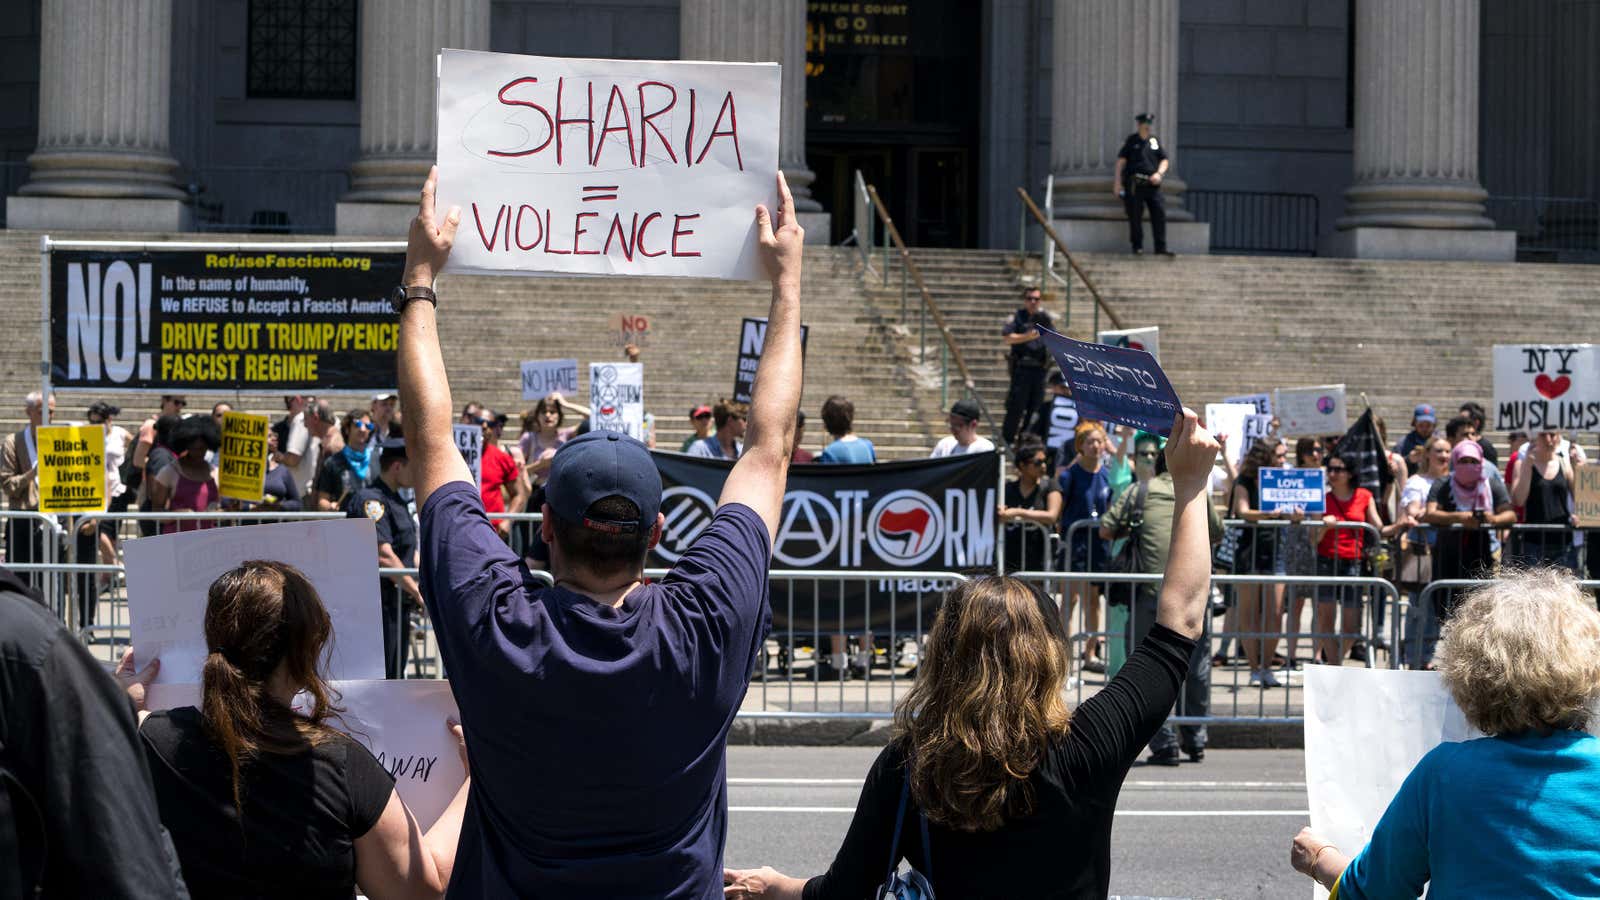 An anti-Muslim rally in New York.